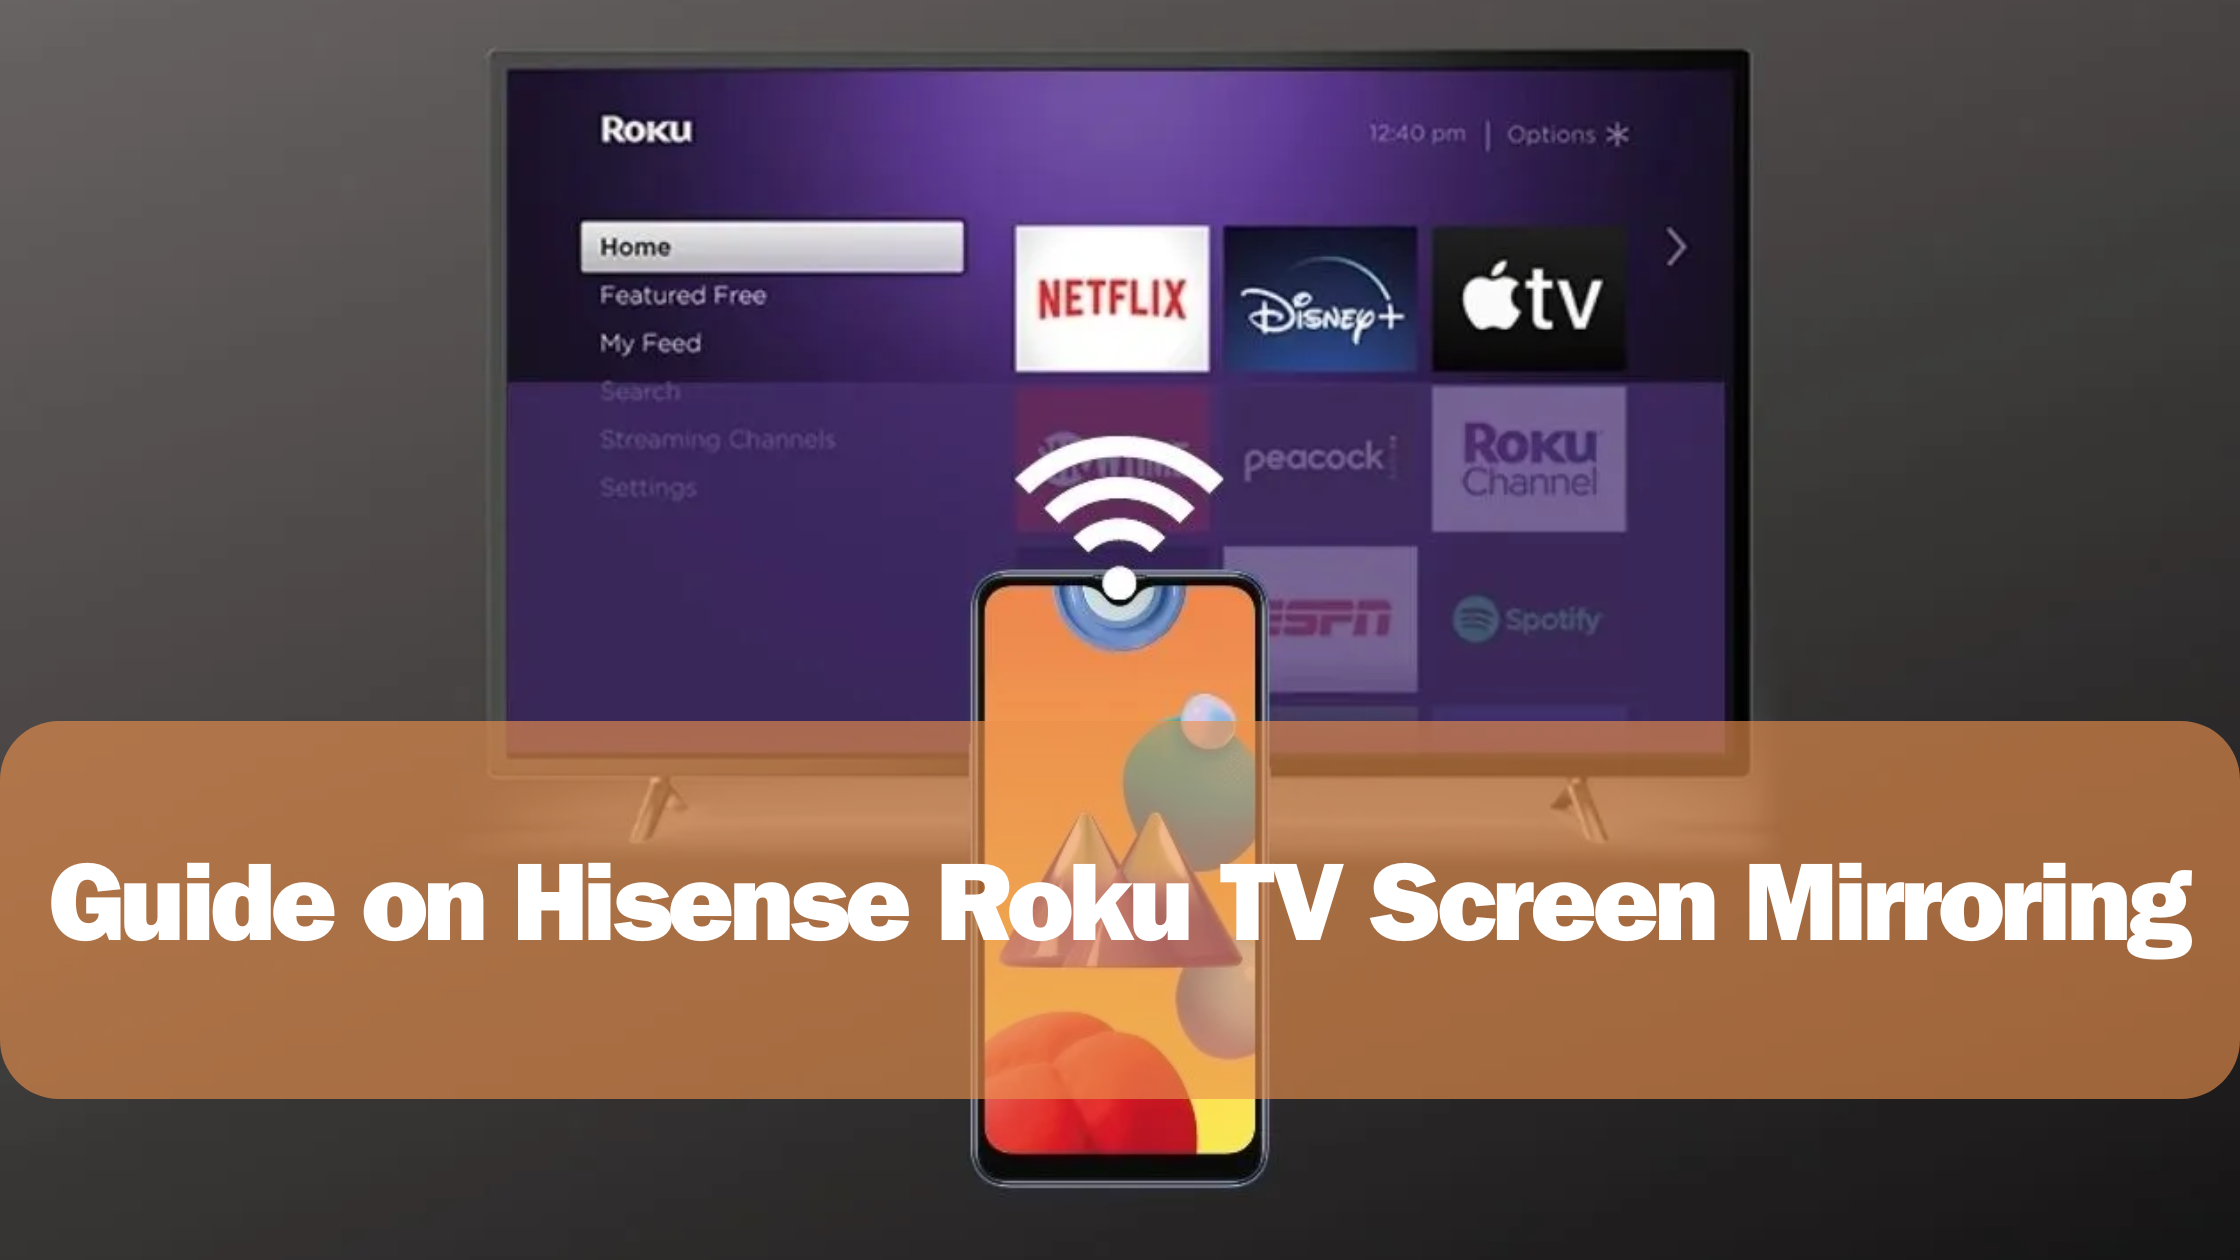 Guide on Hisense Roku TV Screen Mirroring